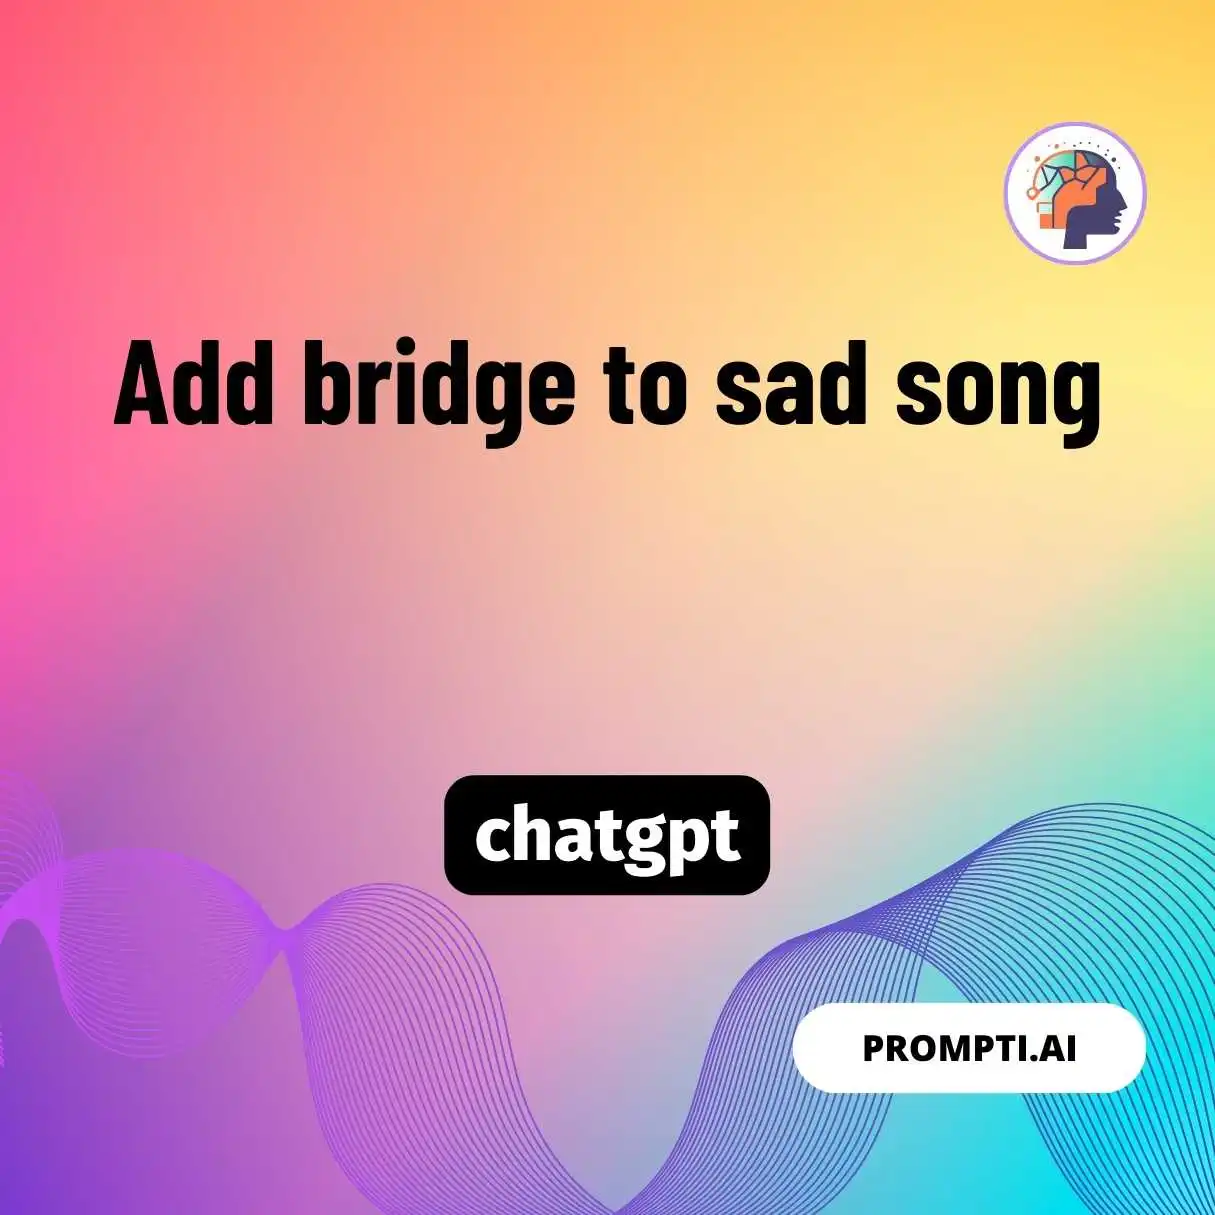 Add bridge to sad song